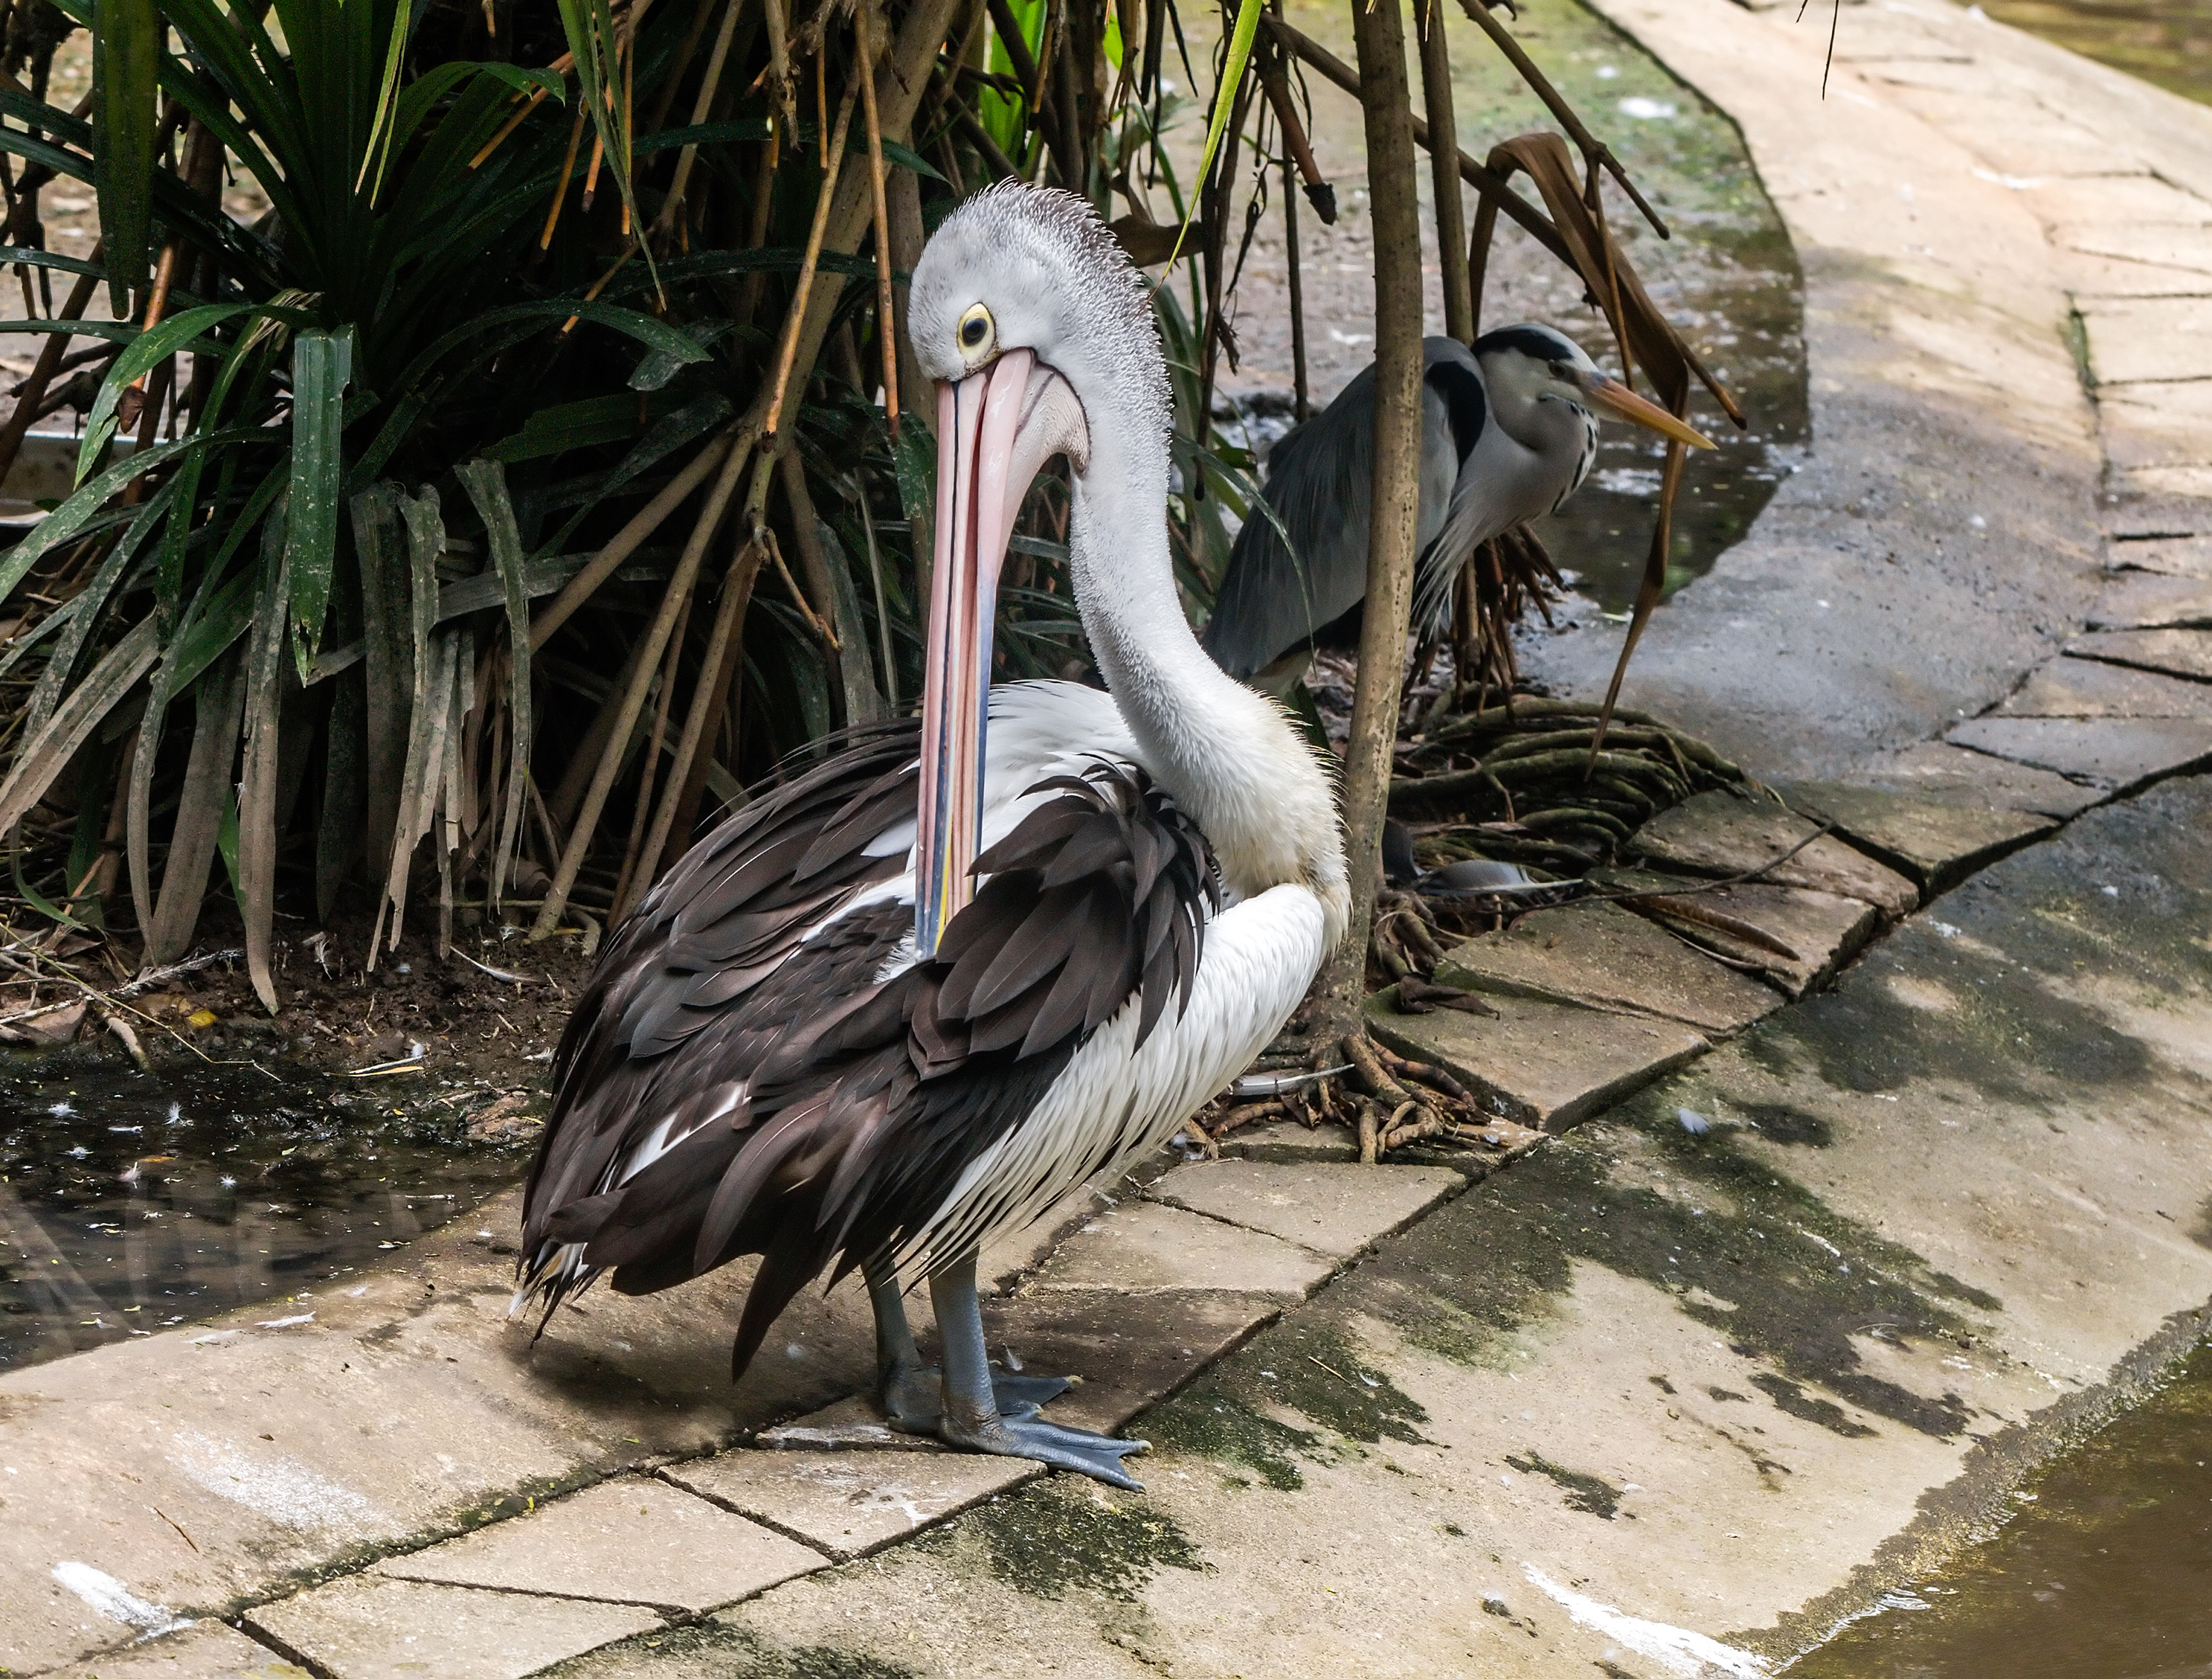 Australian pelican (Pelecanus conspicillatus), Gembira Loka Zoo, Yogyakarta, 2015-03-15